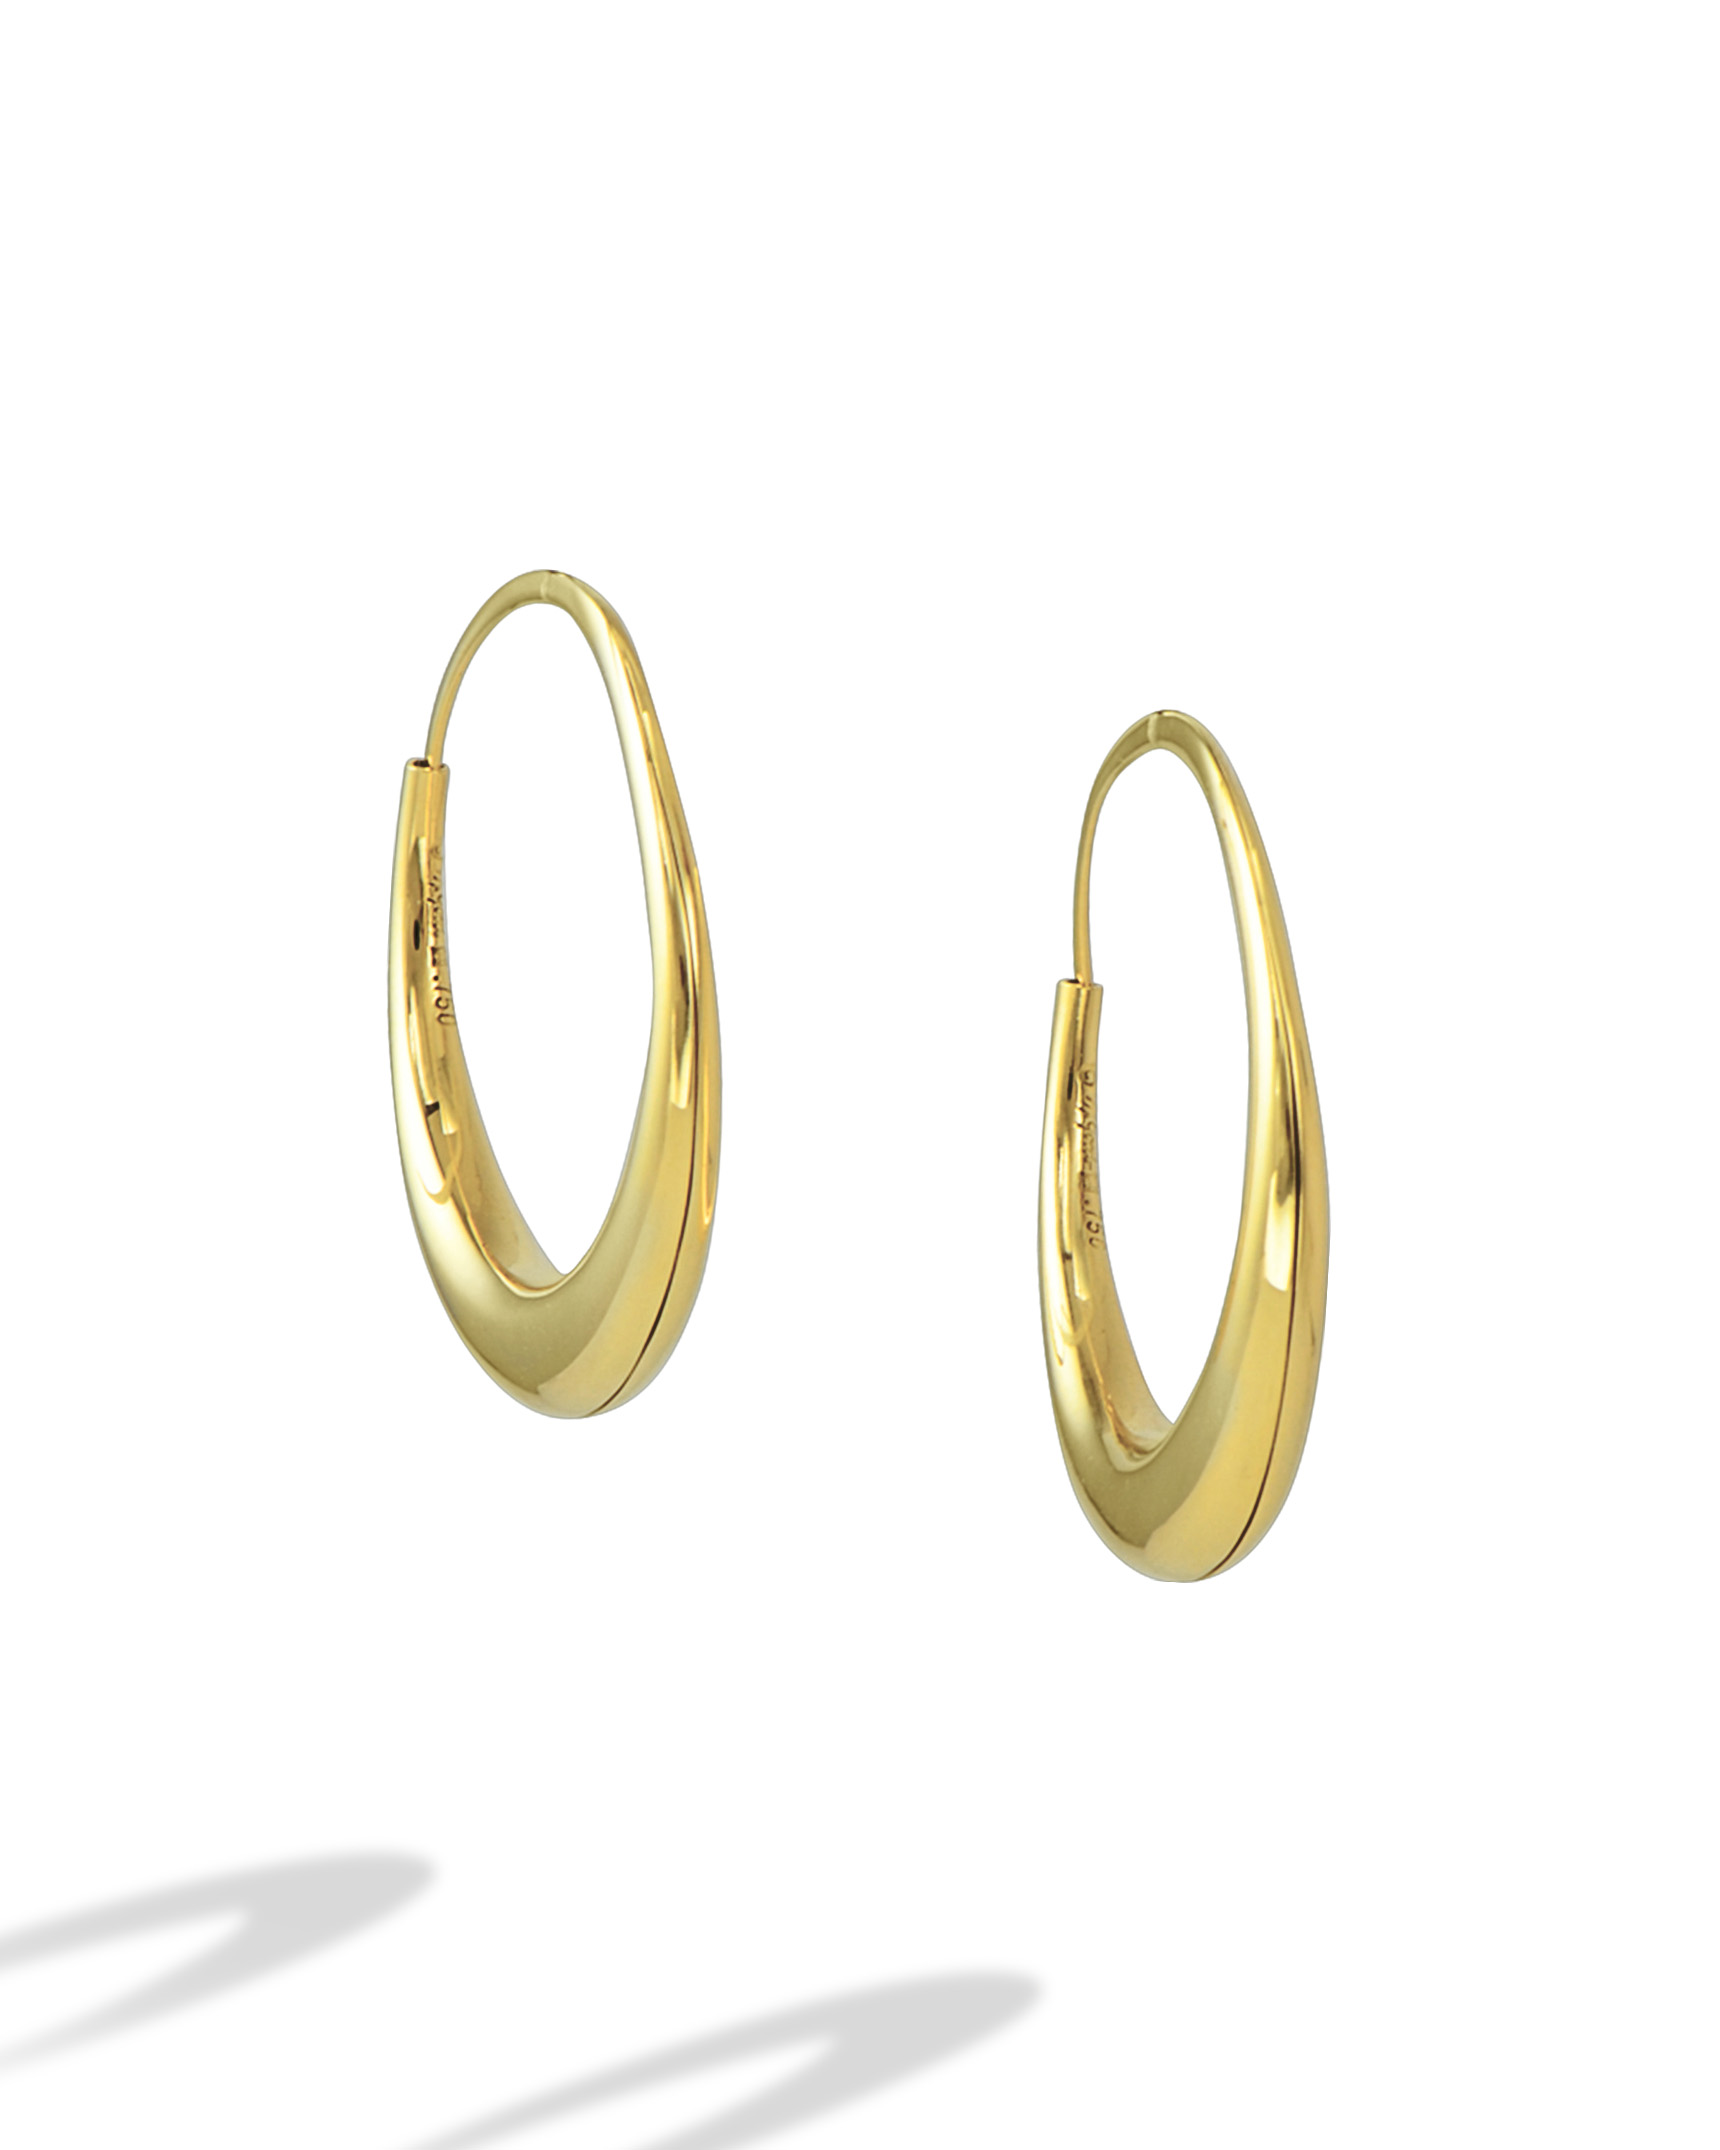 FINE JEWELRY 18K Gold 1/2 Inch Round Hoop Earrings | Hamilton Place